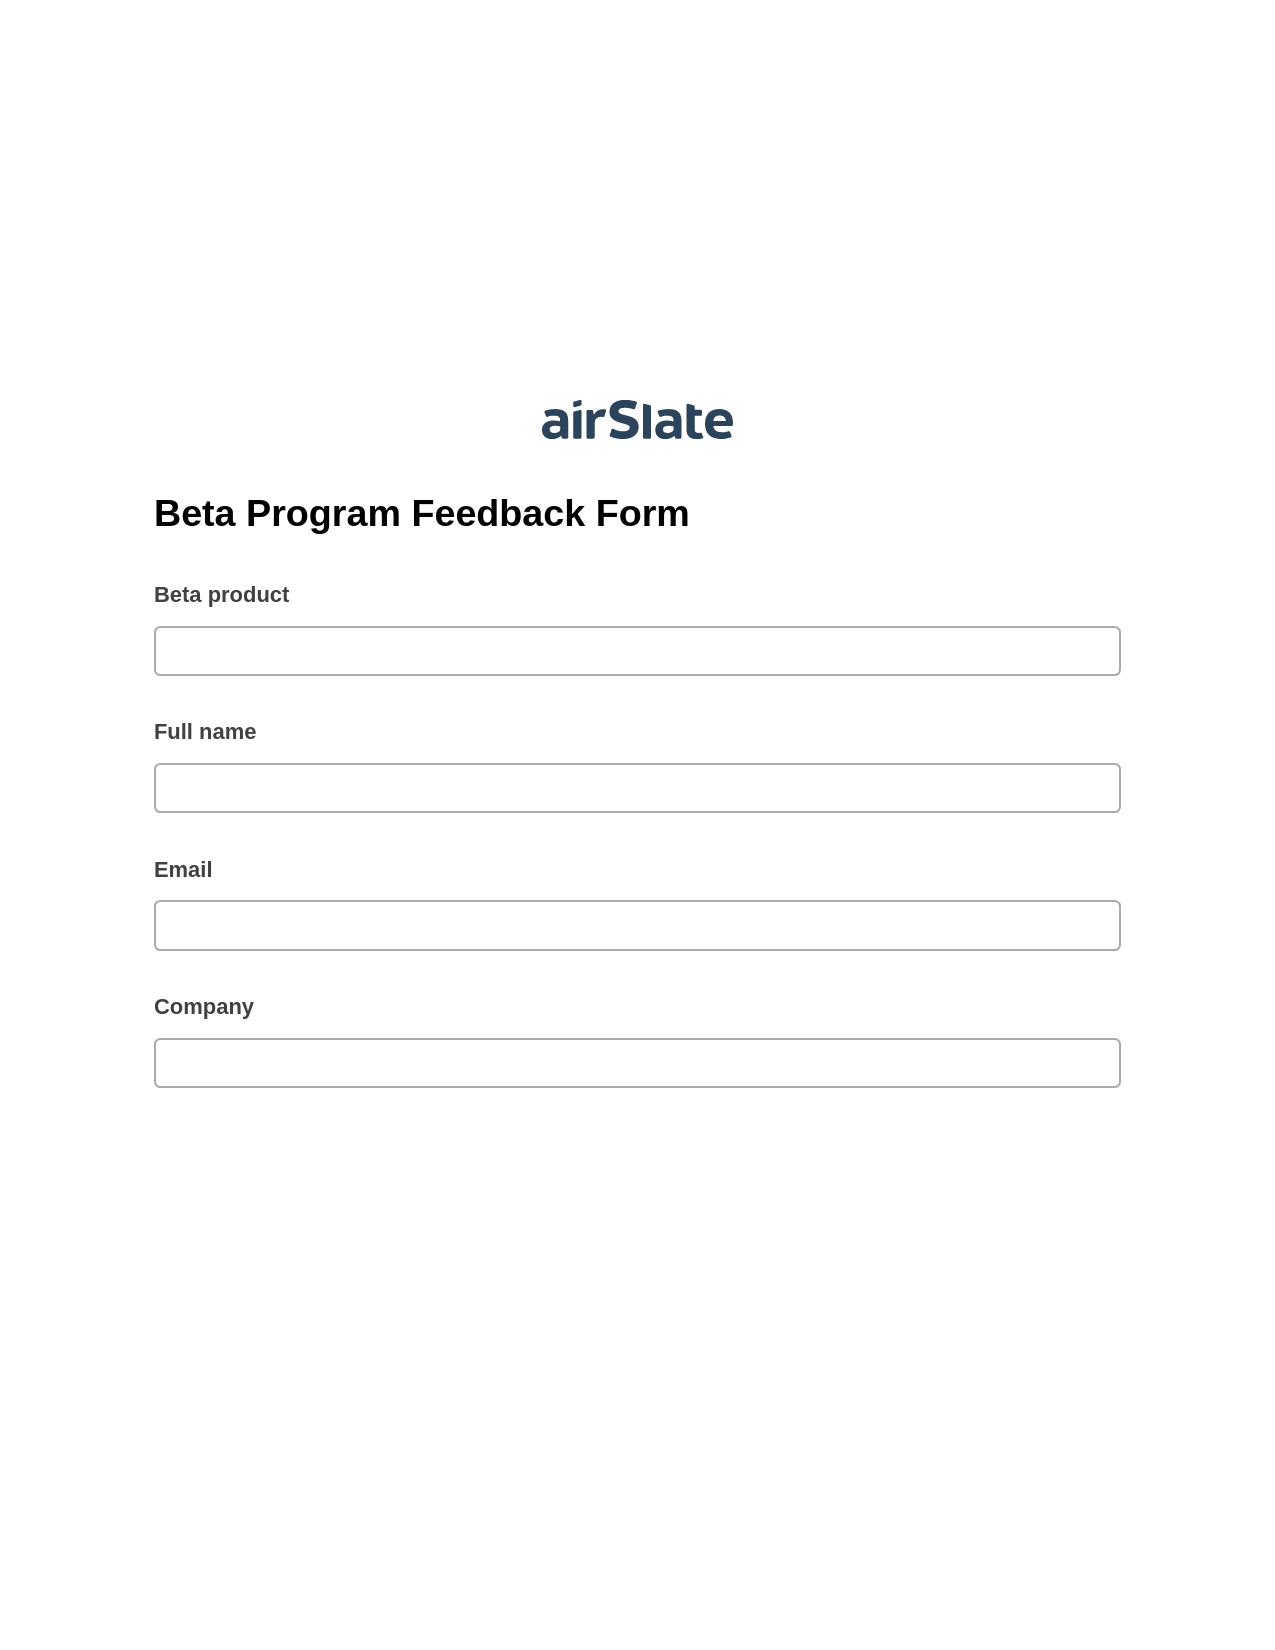 Beta Program Feedback Form Pre-fill Document Bot, Remove Tags From Slate Bot, Dropbox Bot